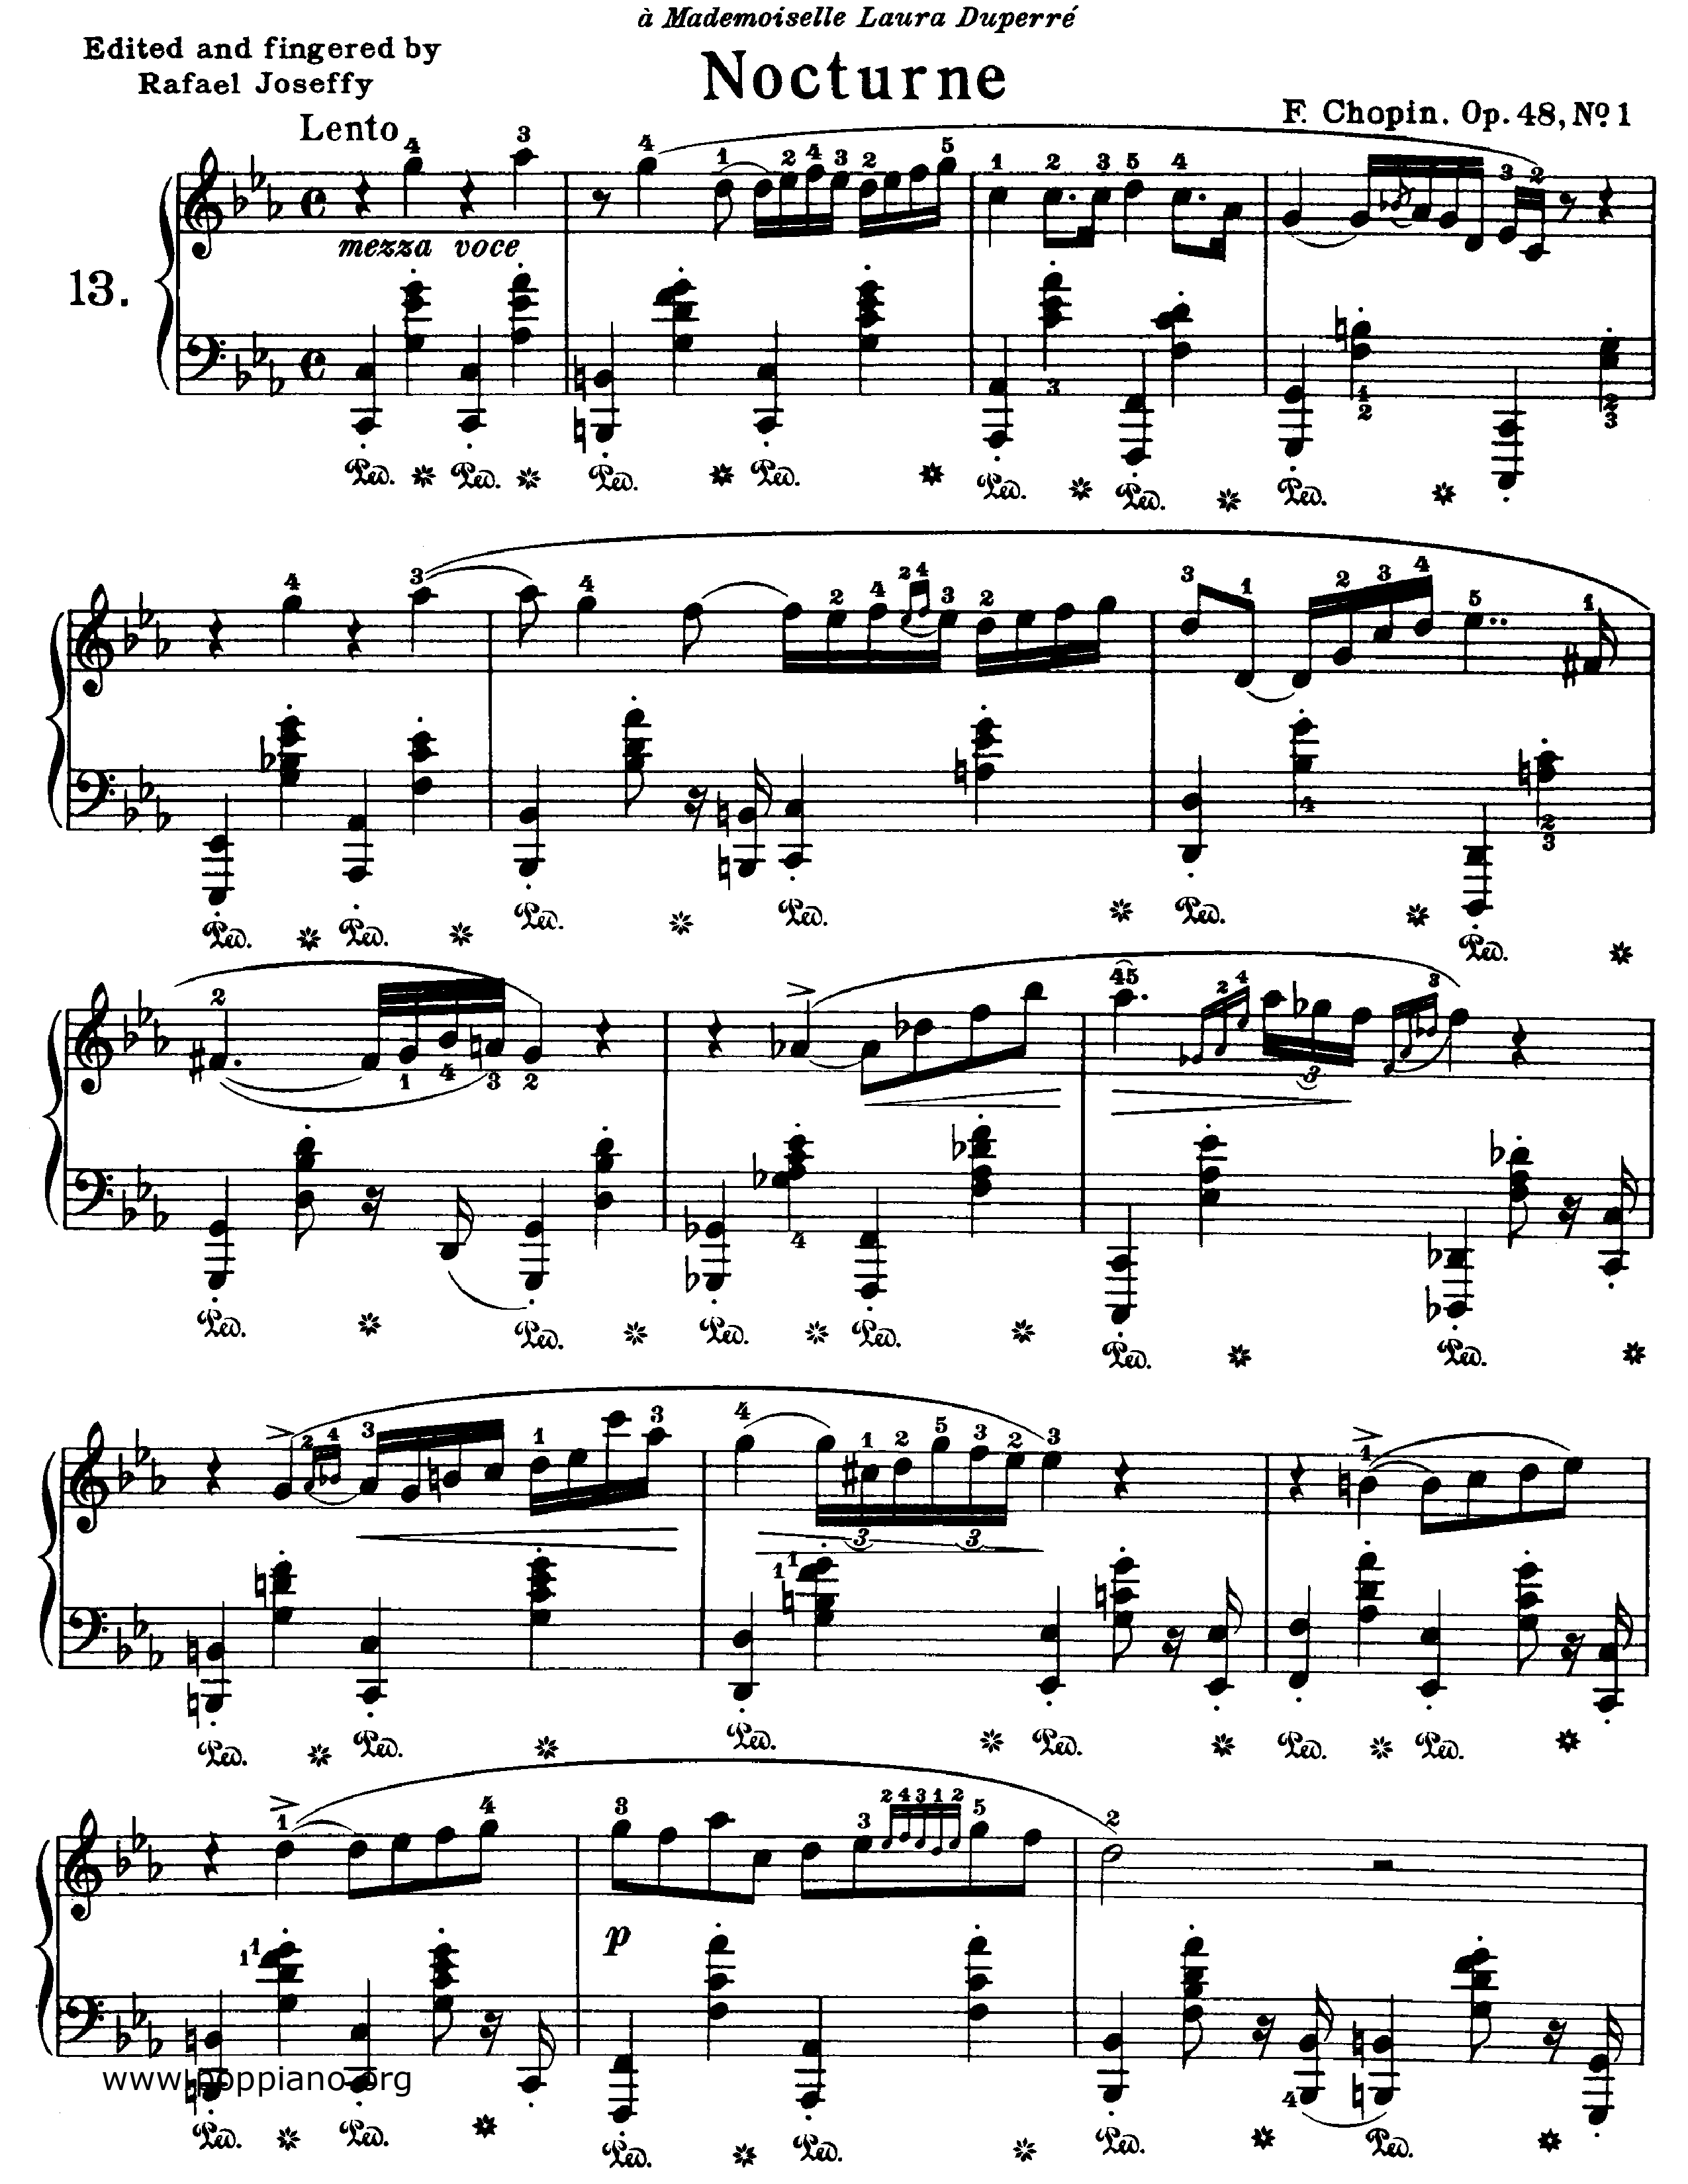 Nocturne No. 13 in C Minor, Op. 48, No. 1ピアノ譜